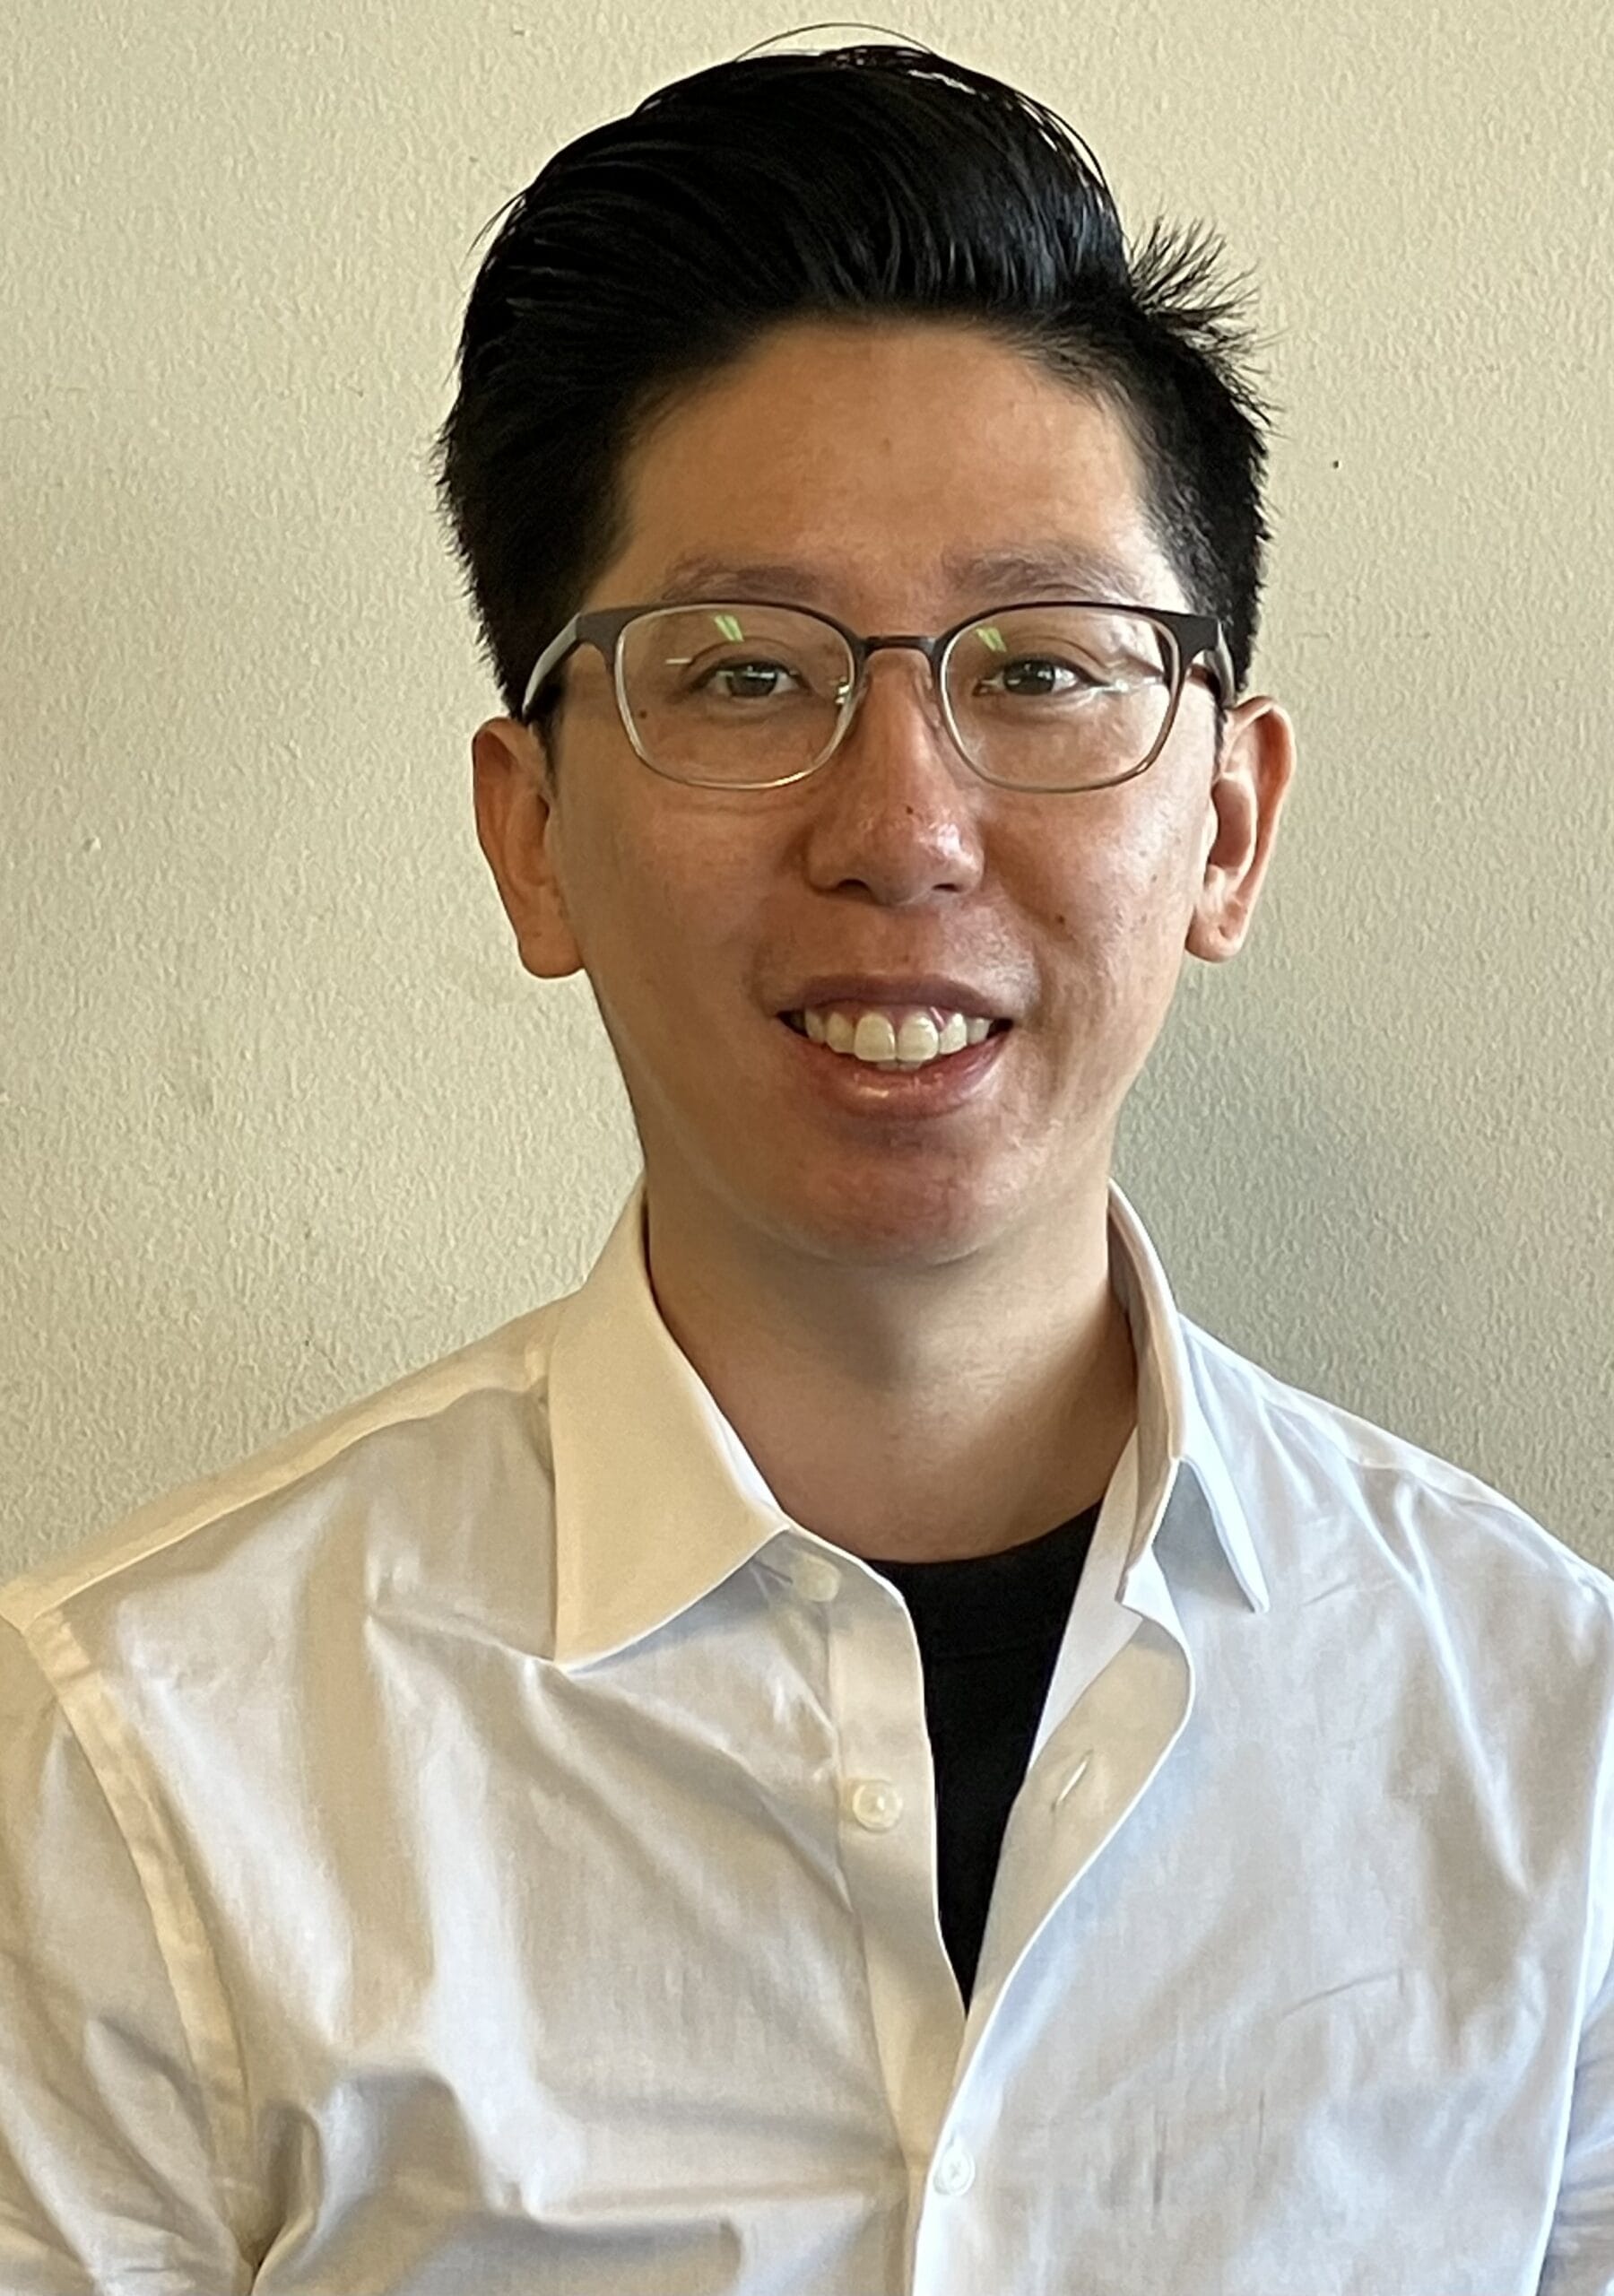 Samson Lin, program supervisor at The San Francisco Senior Center (SFSC) opened in Aquatic Park